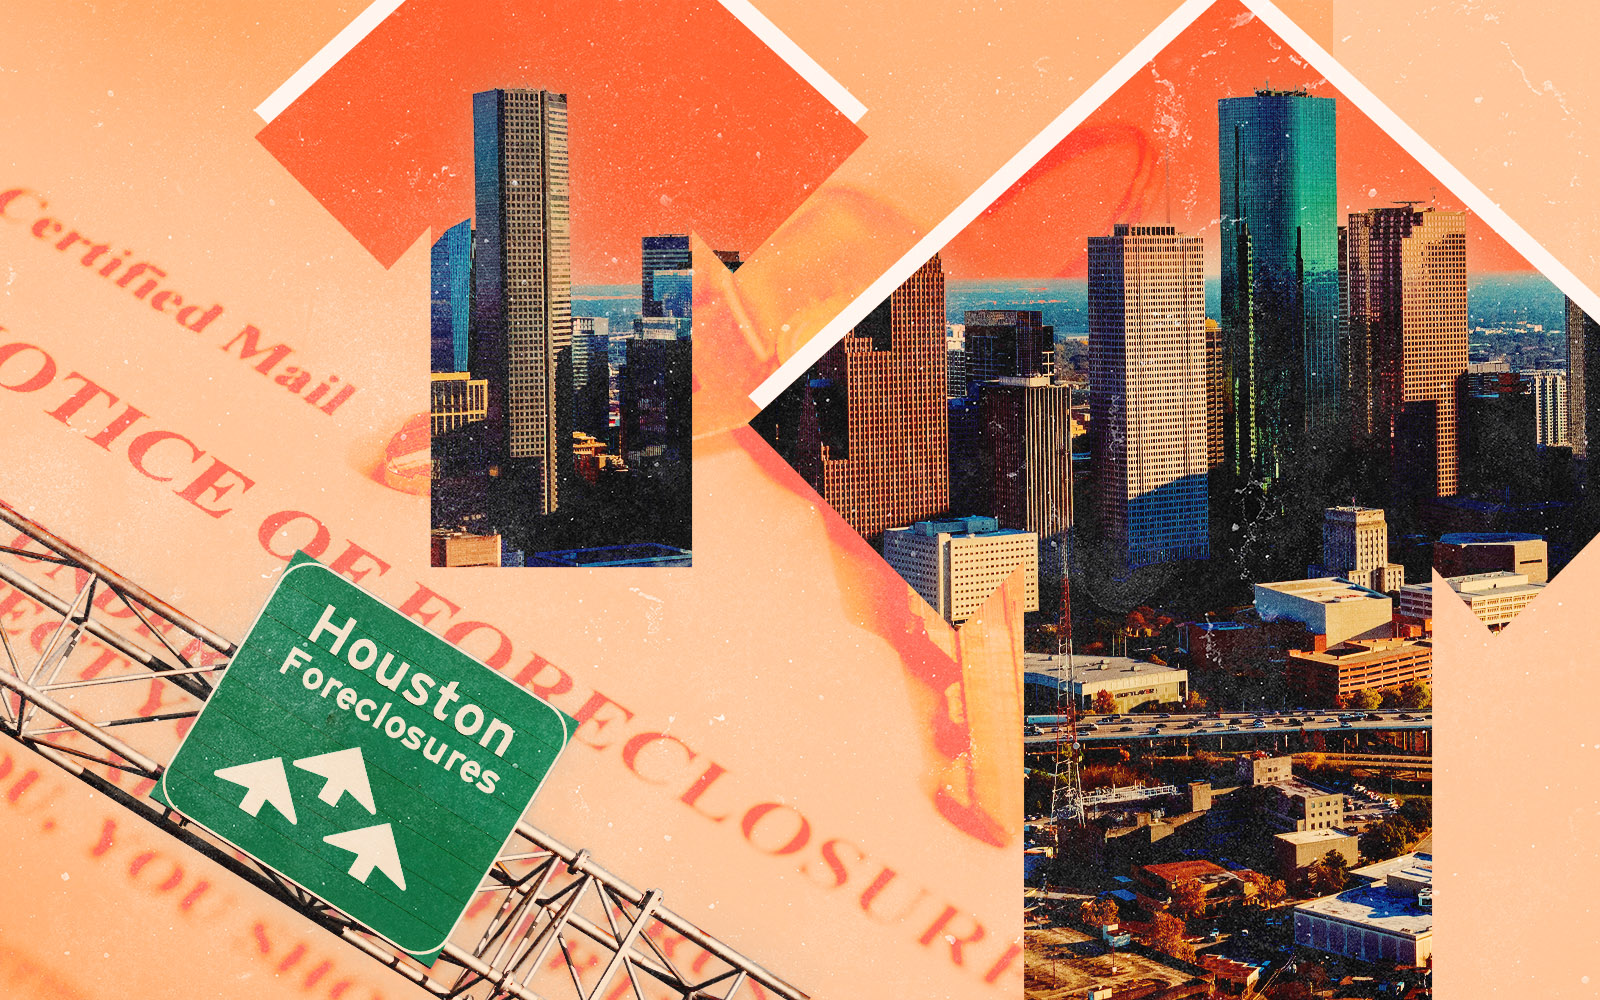 Houston foreclosure starts ranked 4th in U.S.